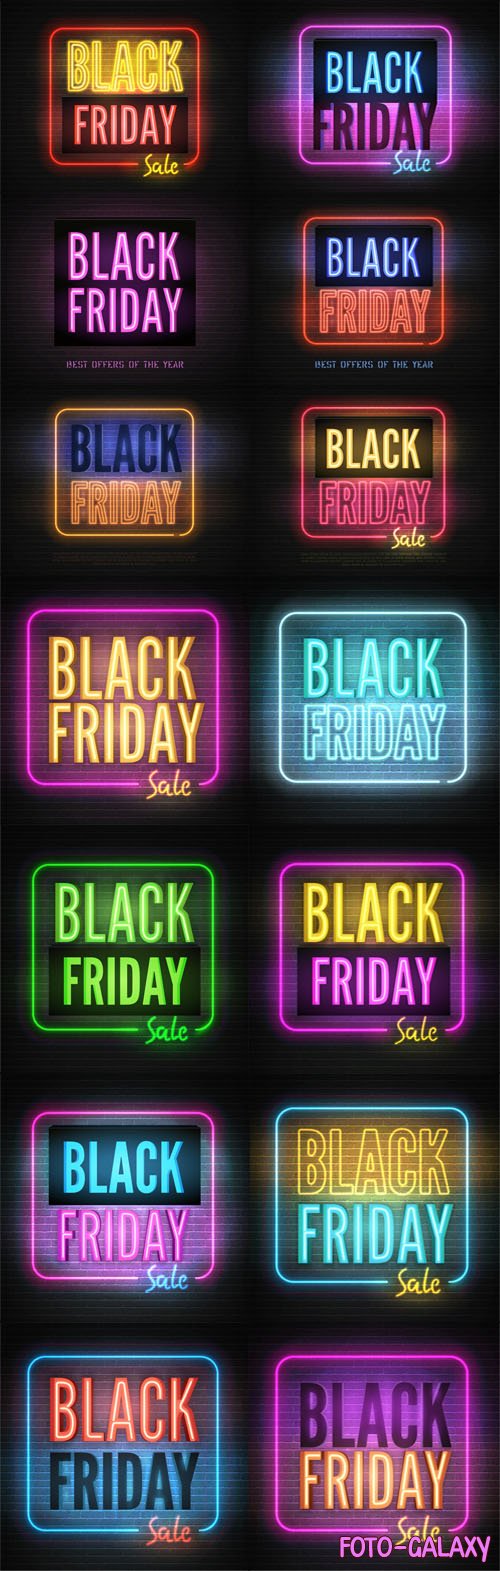 Black Friday - 20 Neon Light Box Vector Templates Collection